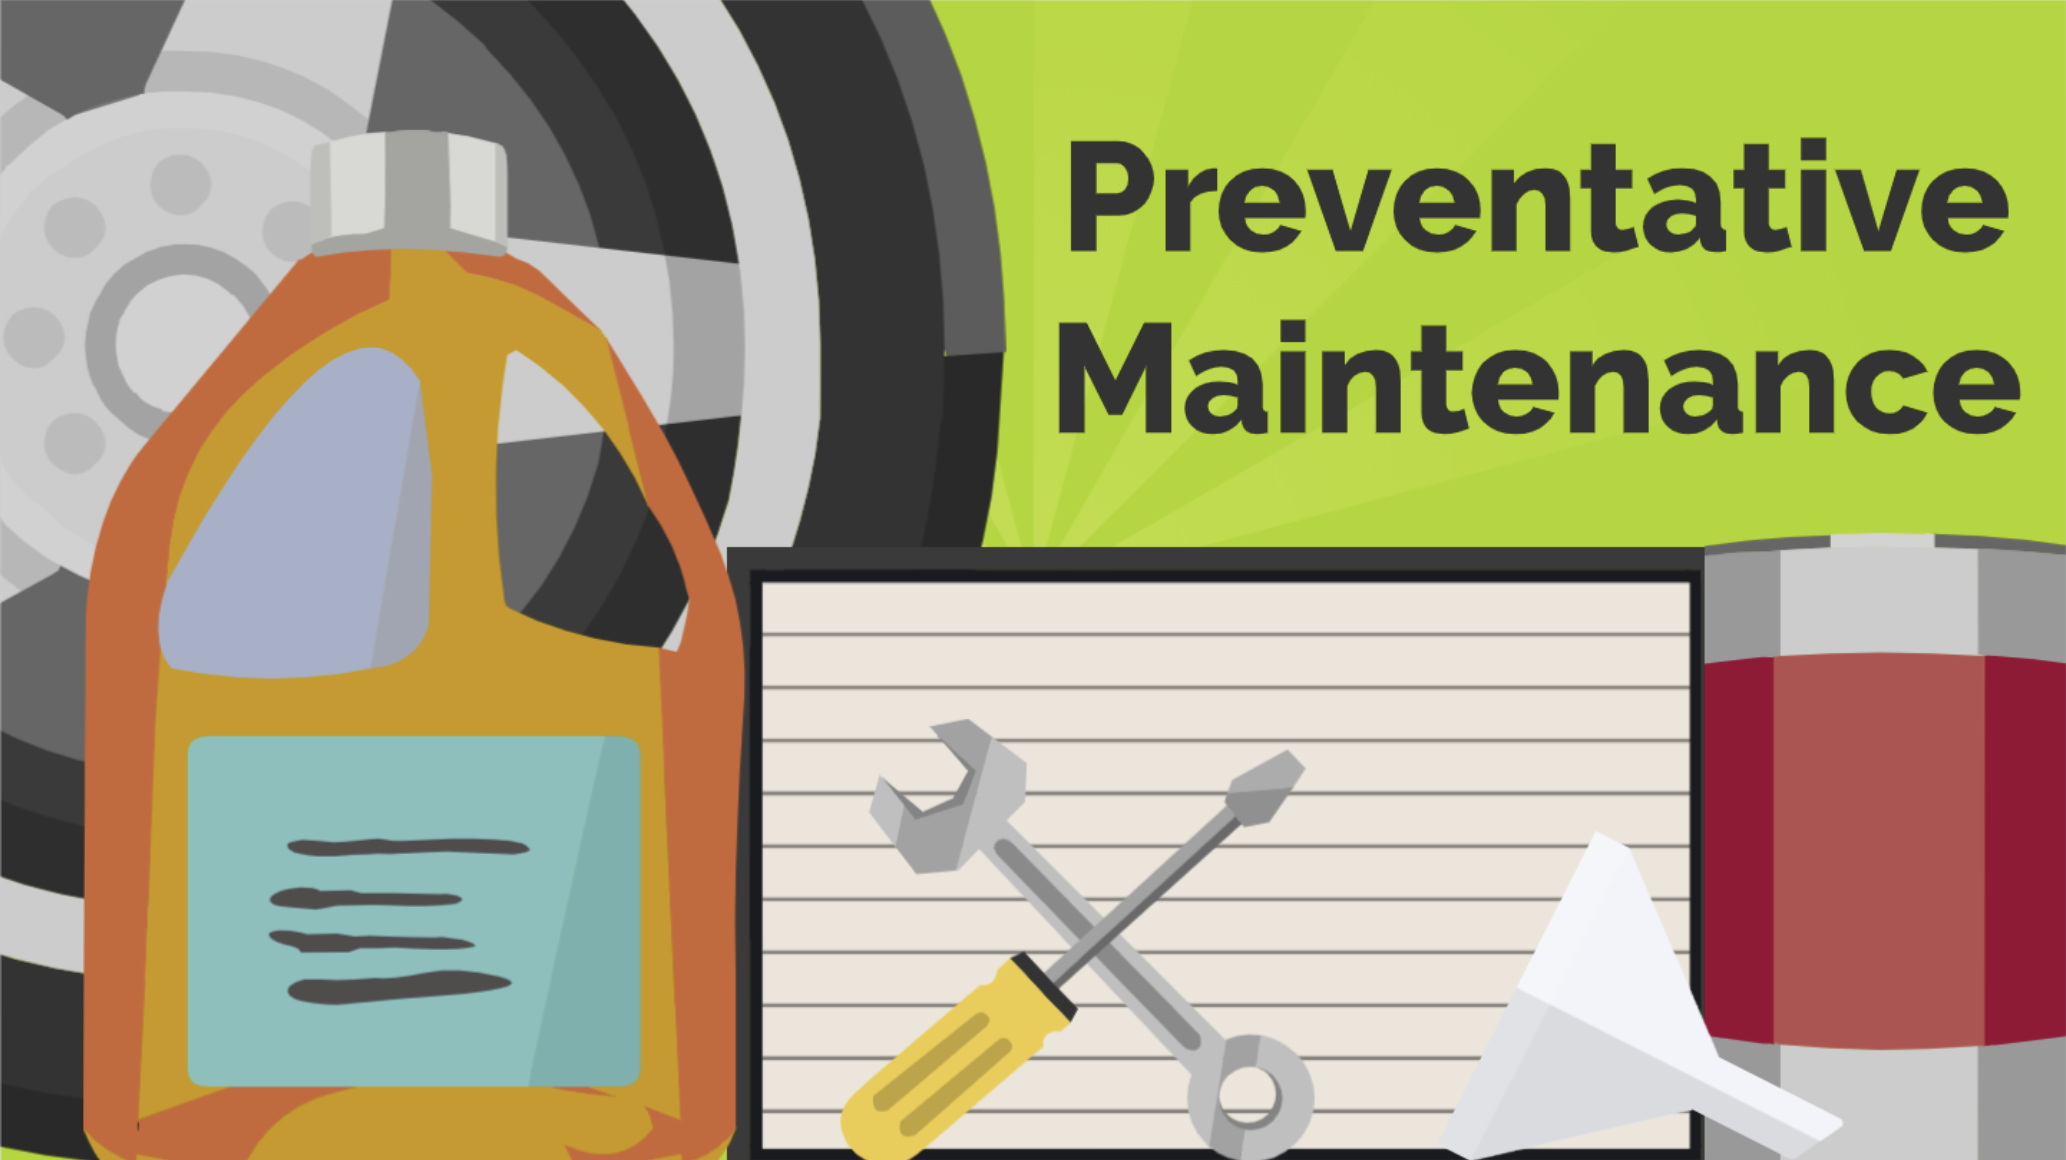 Preventative maintenance webinar promo image